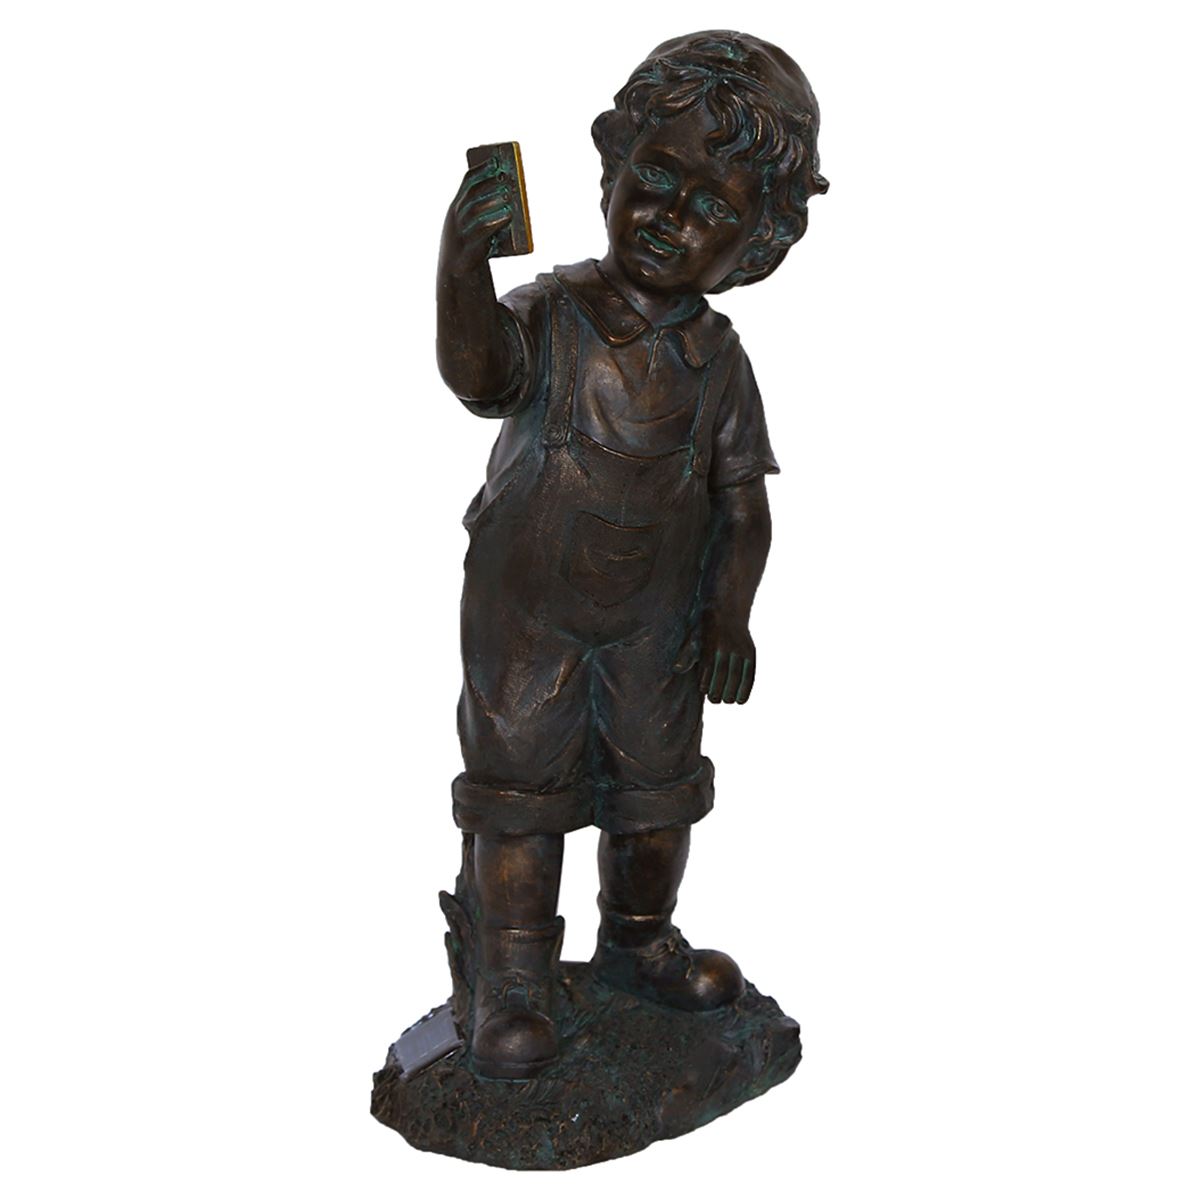 Northlight Seasonal Solar Powered Boy & Cell Phone Patio Statue